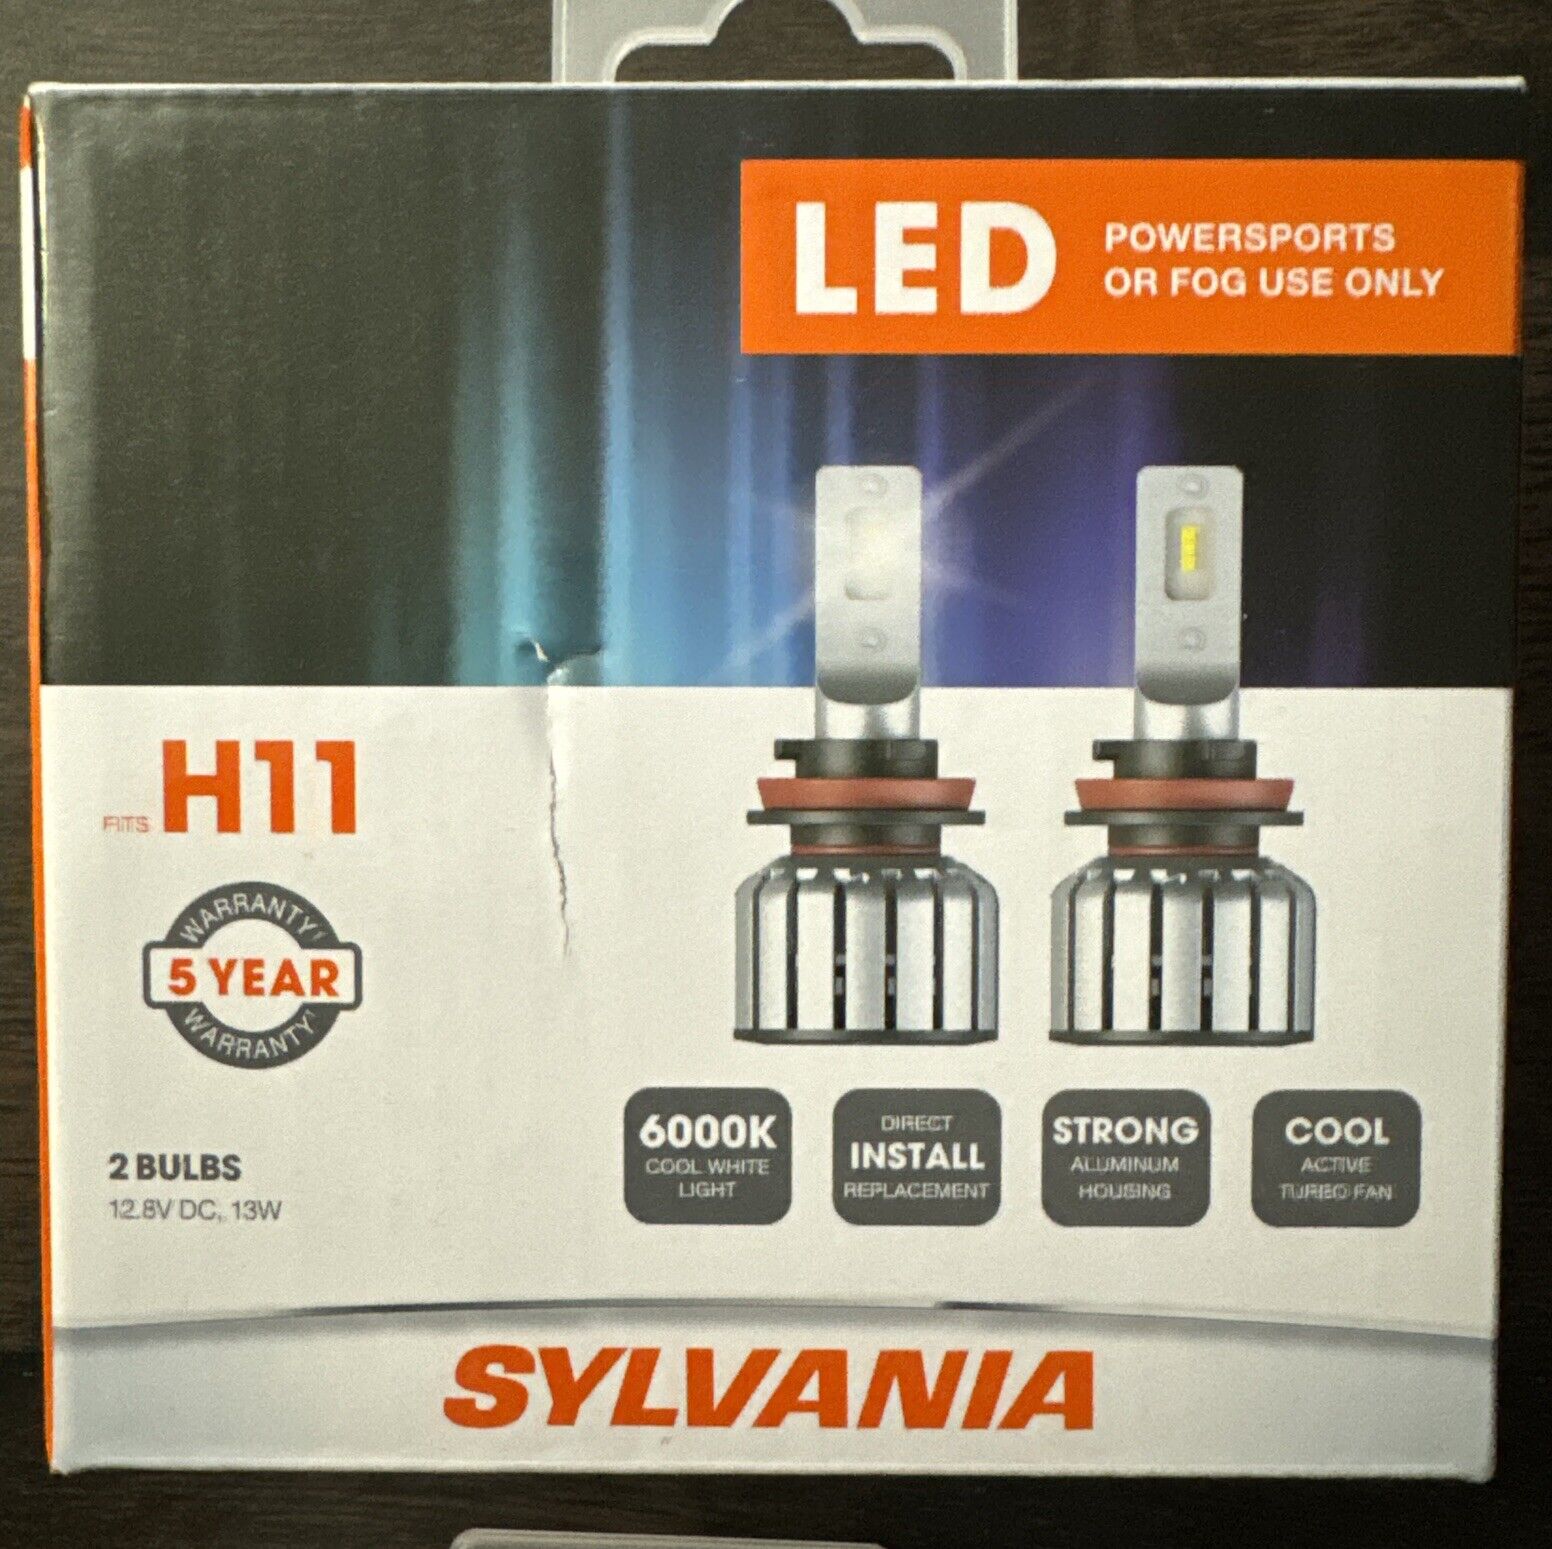 2 NEW SEALED Sylvania H11 LED 6000K Power Sports Bulbs H11SL.BX2 *LOWEST PRICE